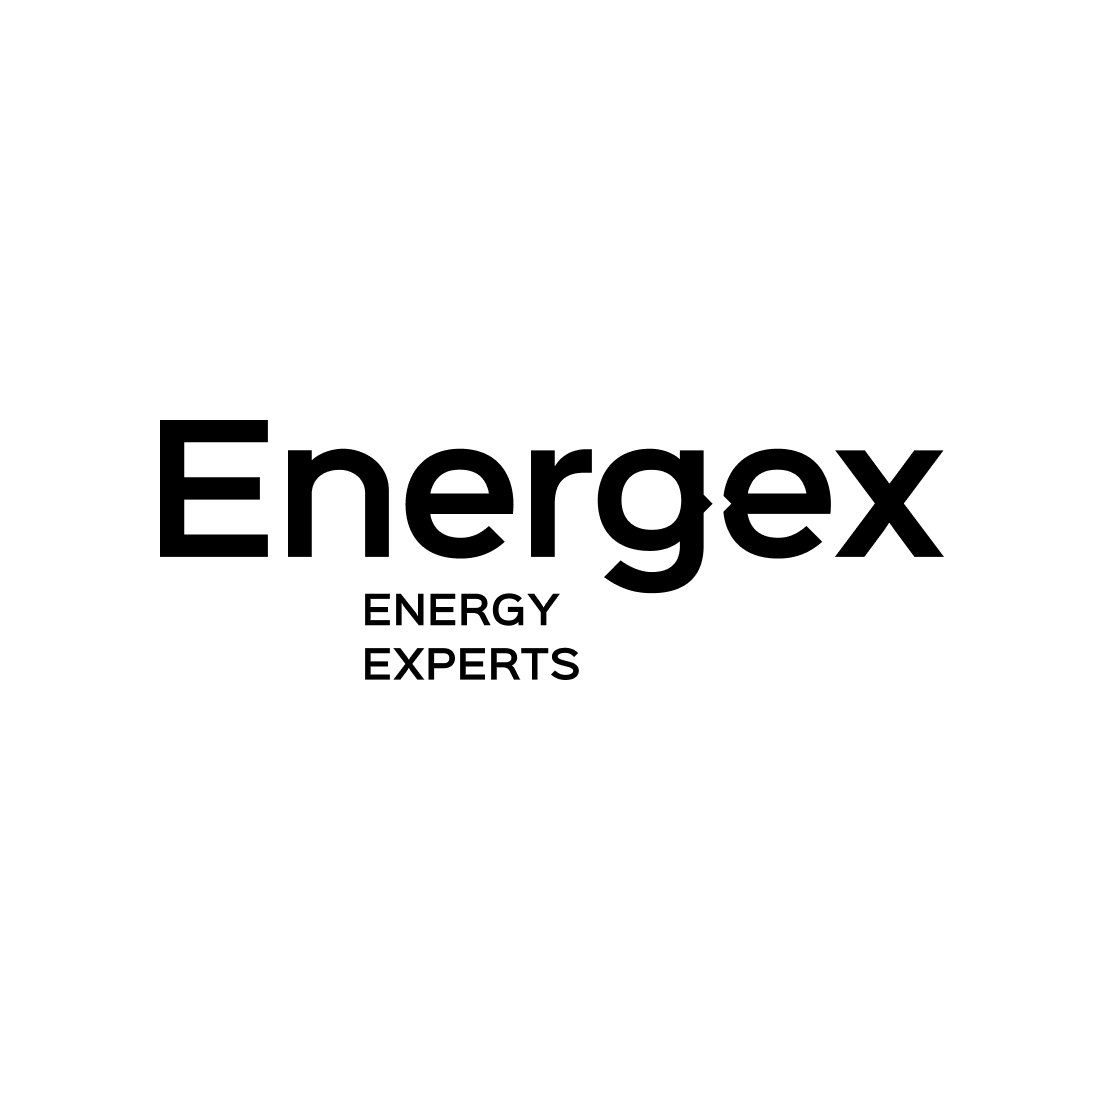 Energex Energy Experts